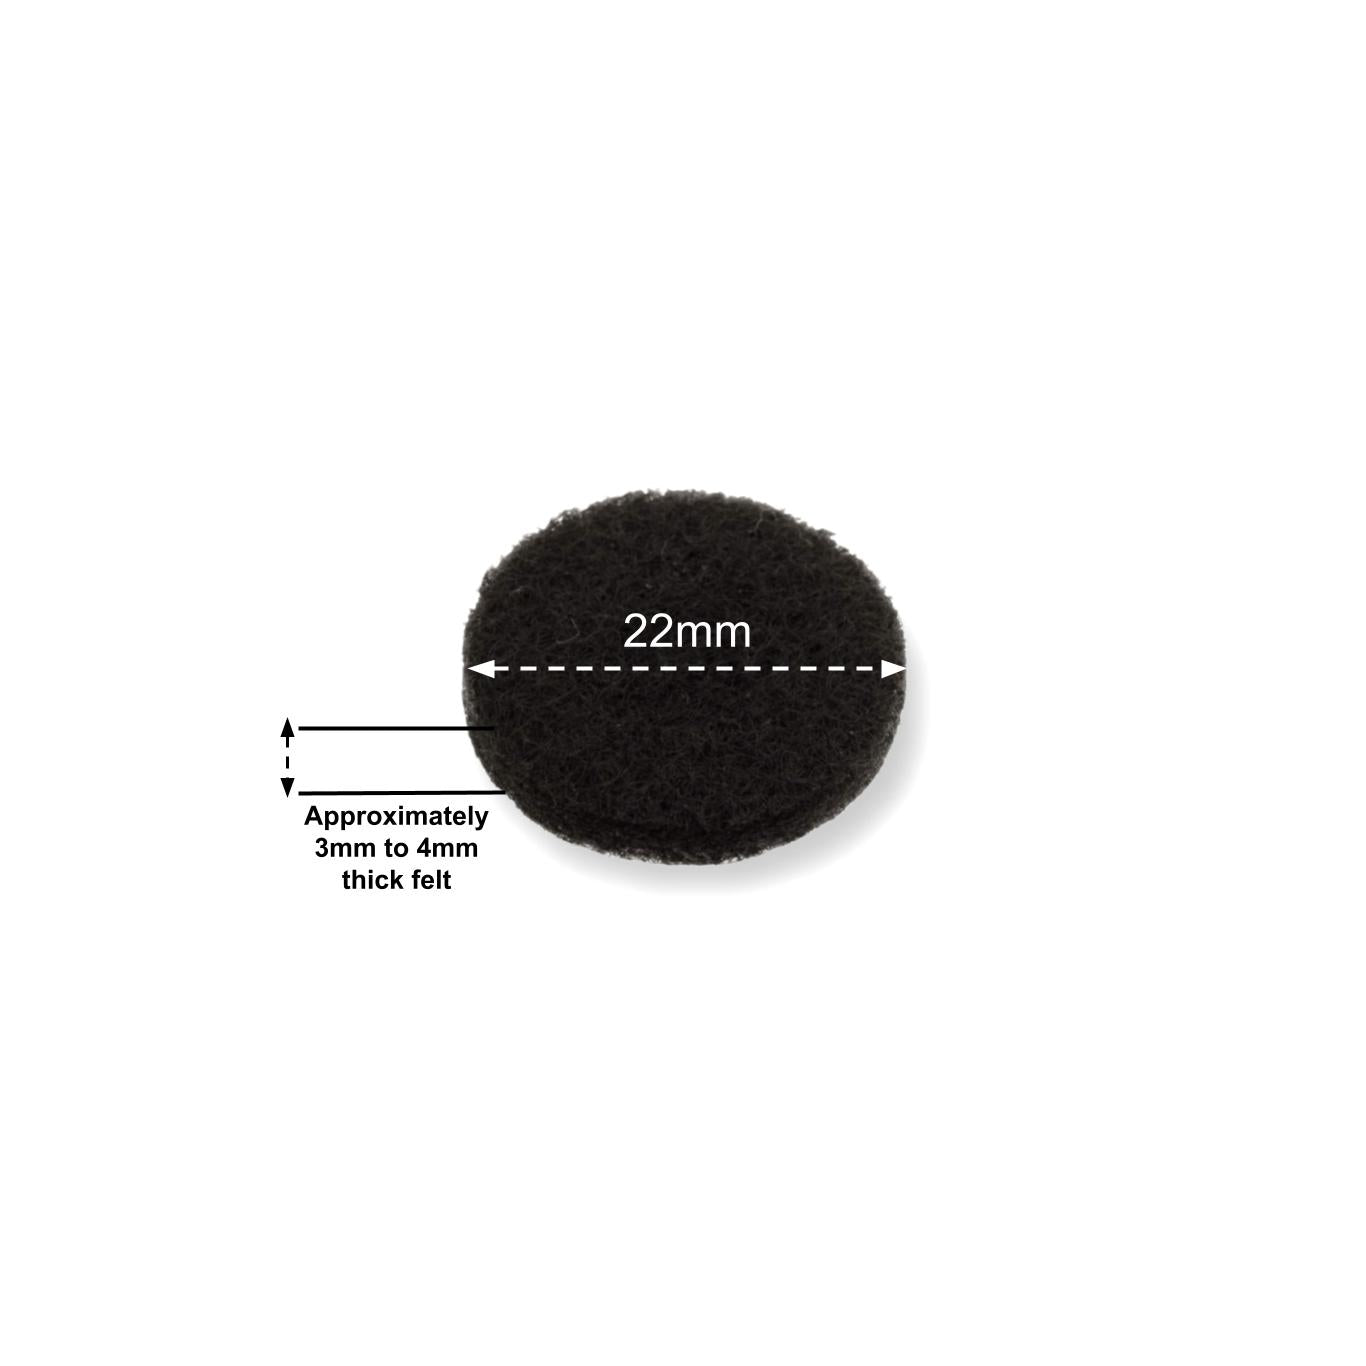 Felt Pads - Dark Brown Self Adhesive Stick on Felt - Round 22mm Diameter - Made in Germany